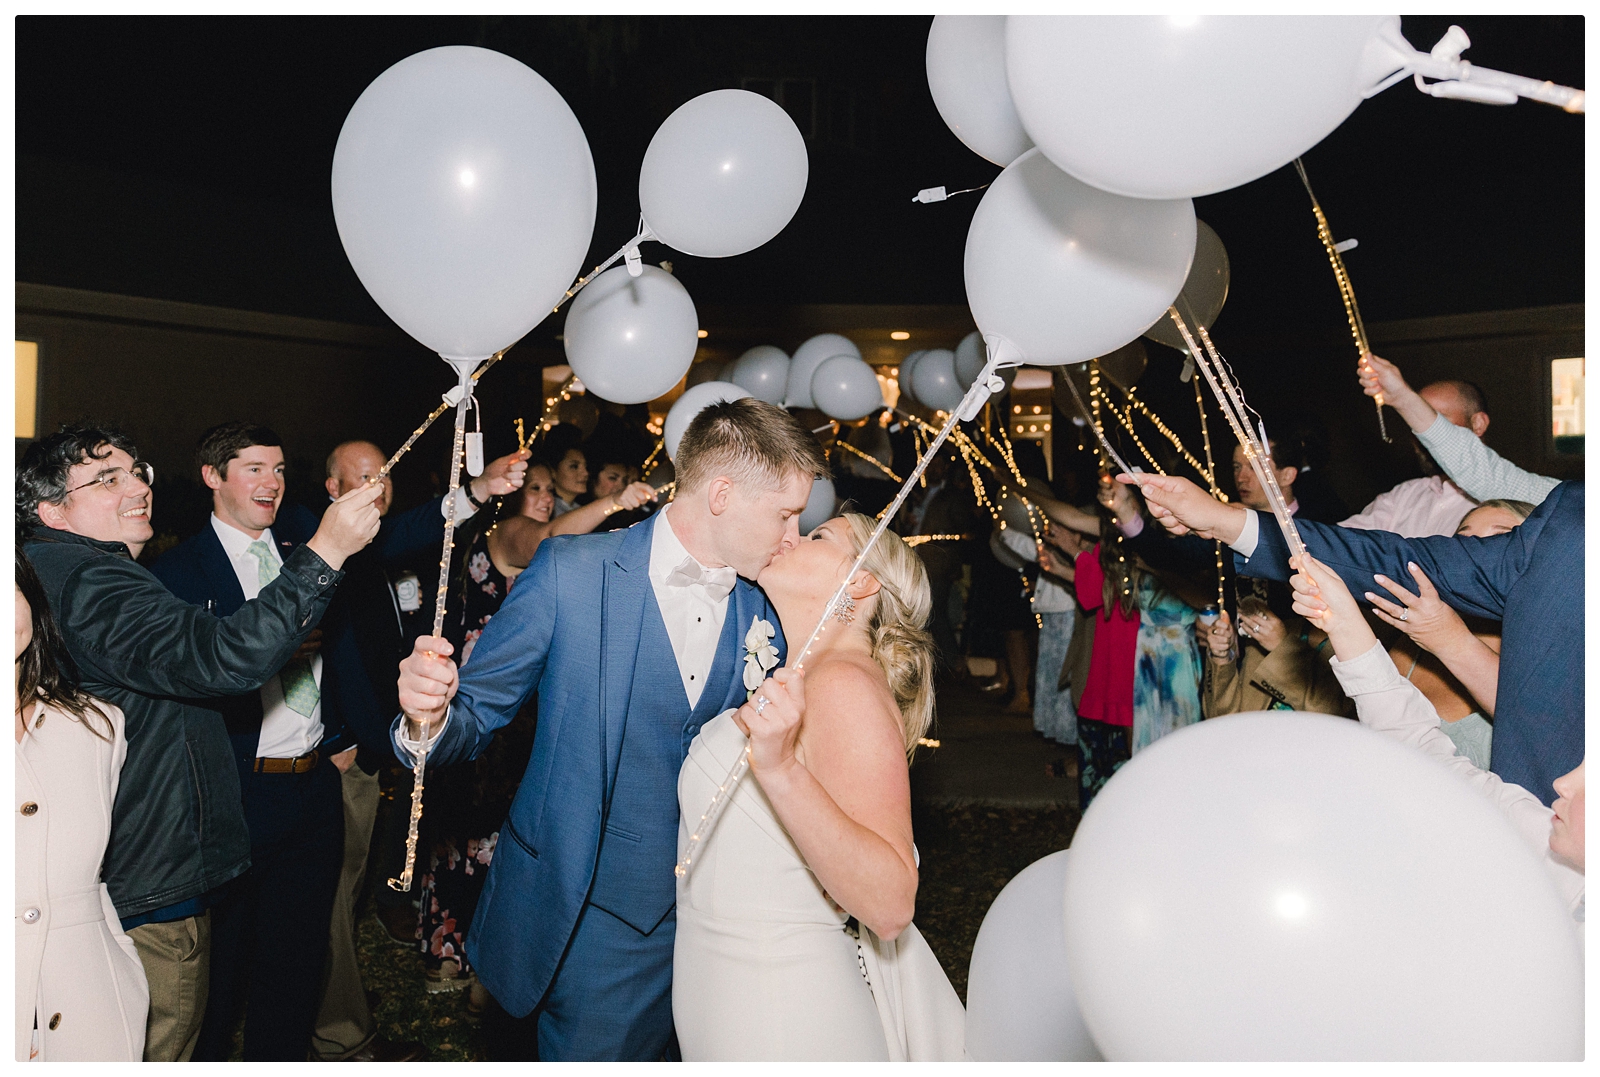 fun wedding exit with balloons